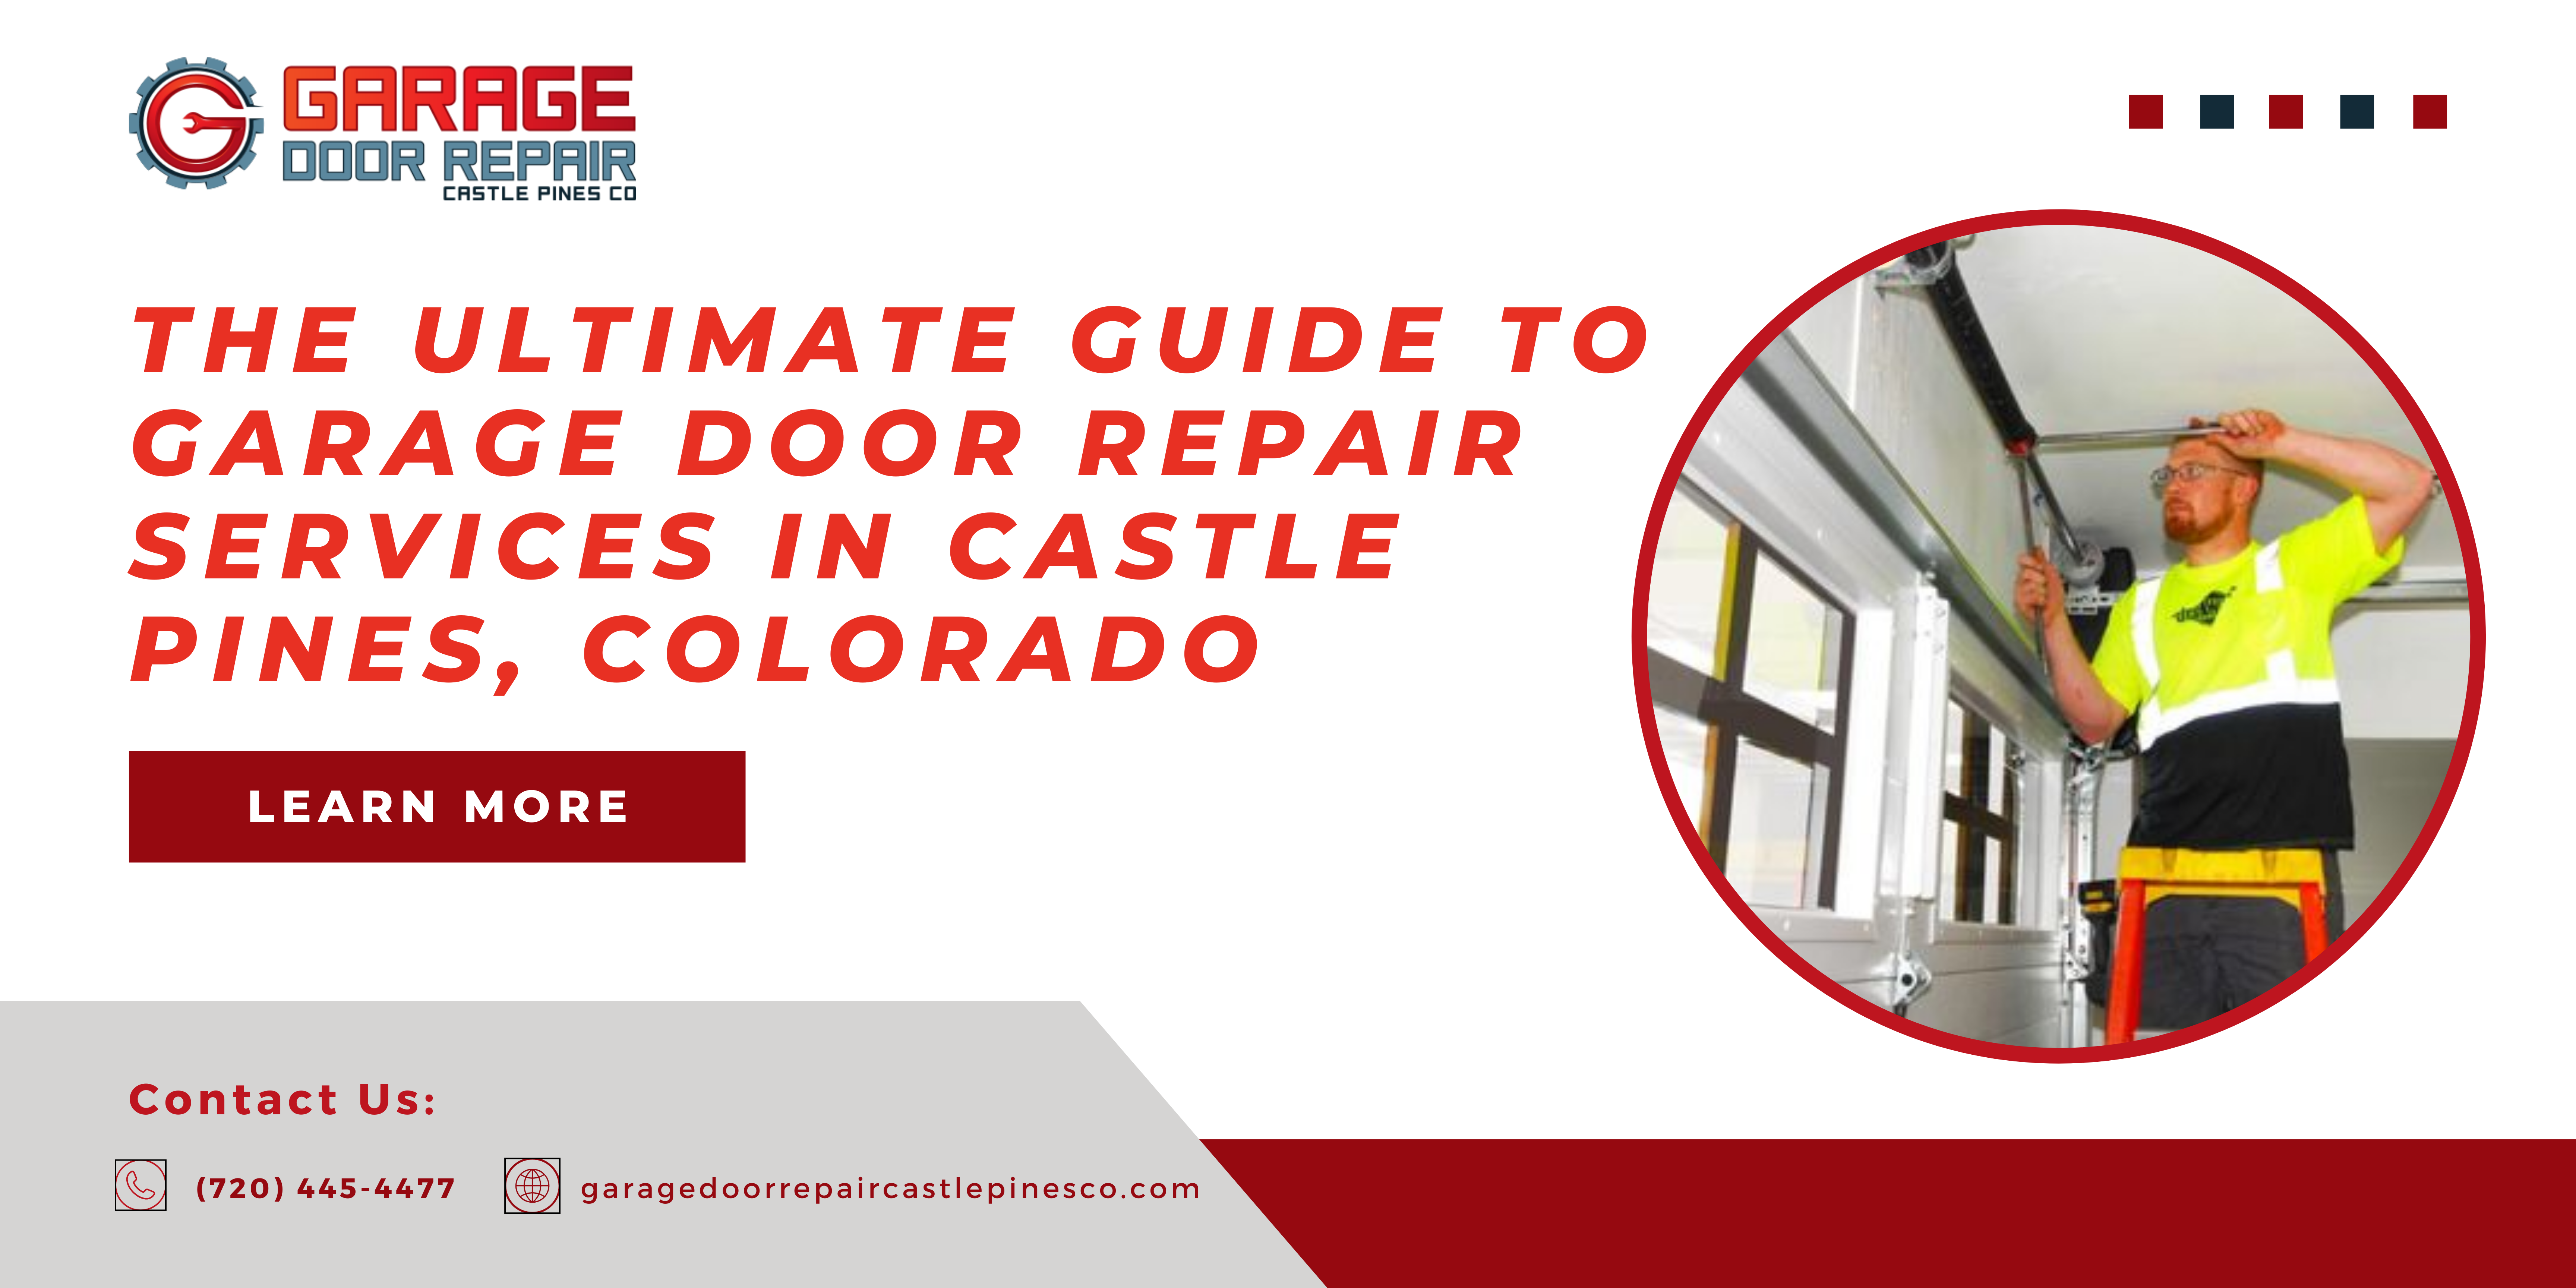 The Ultimate Guide to Garage Door Repair Services in Castle Pines, Colorado